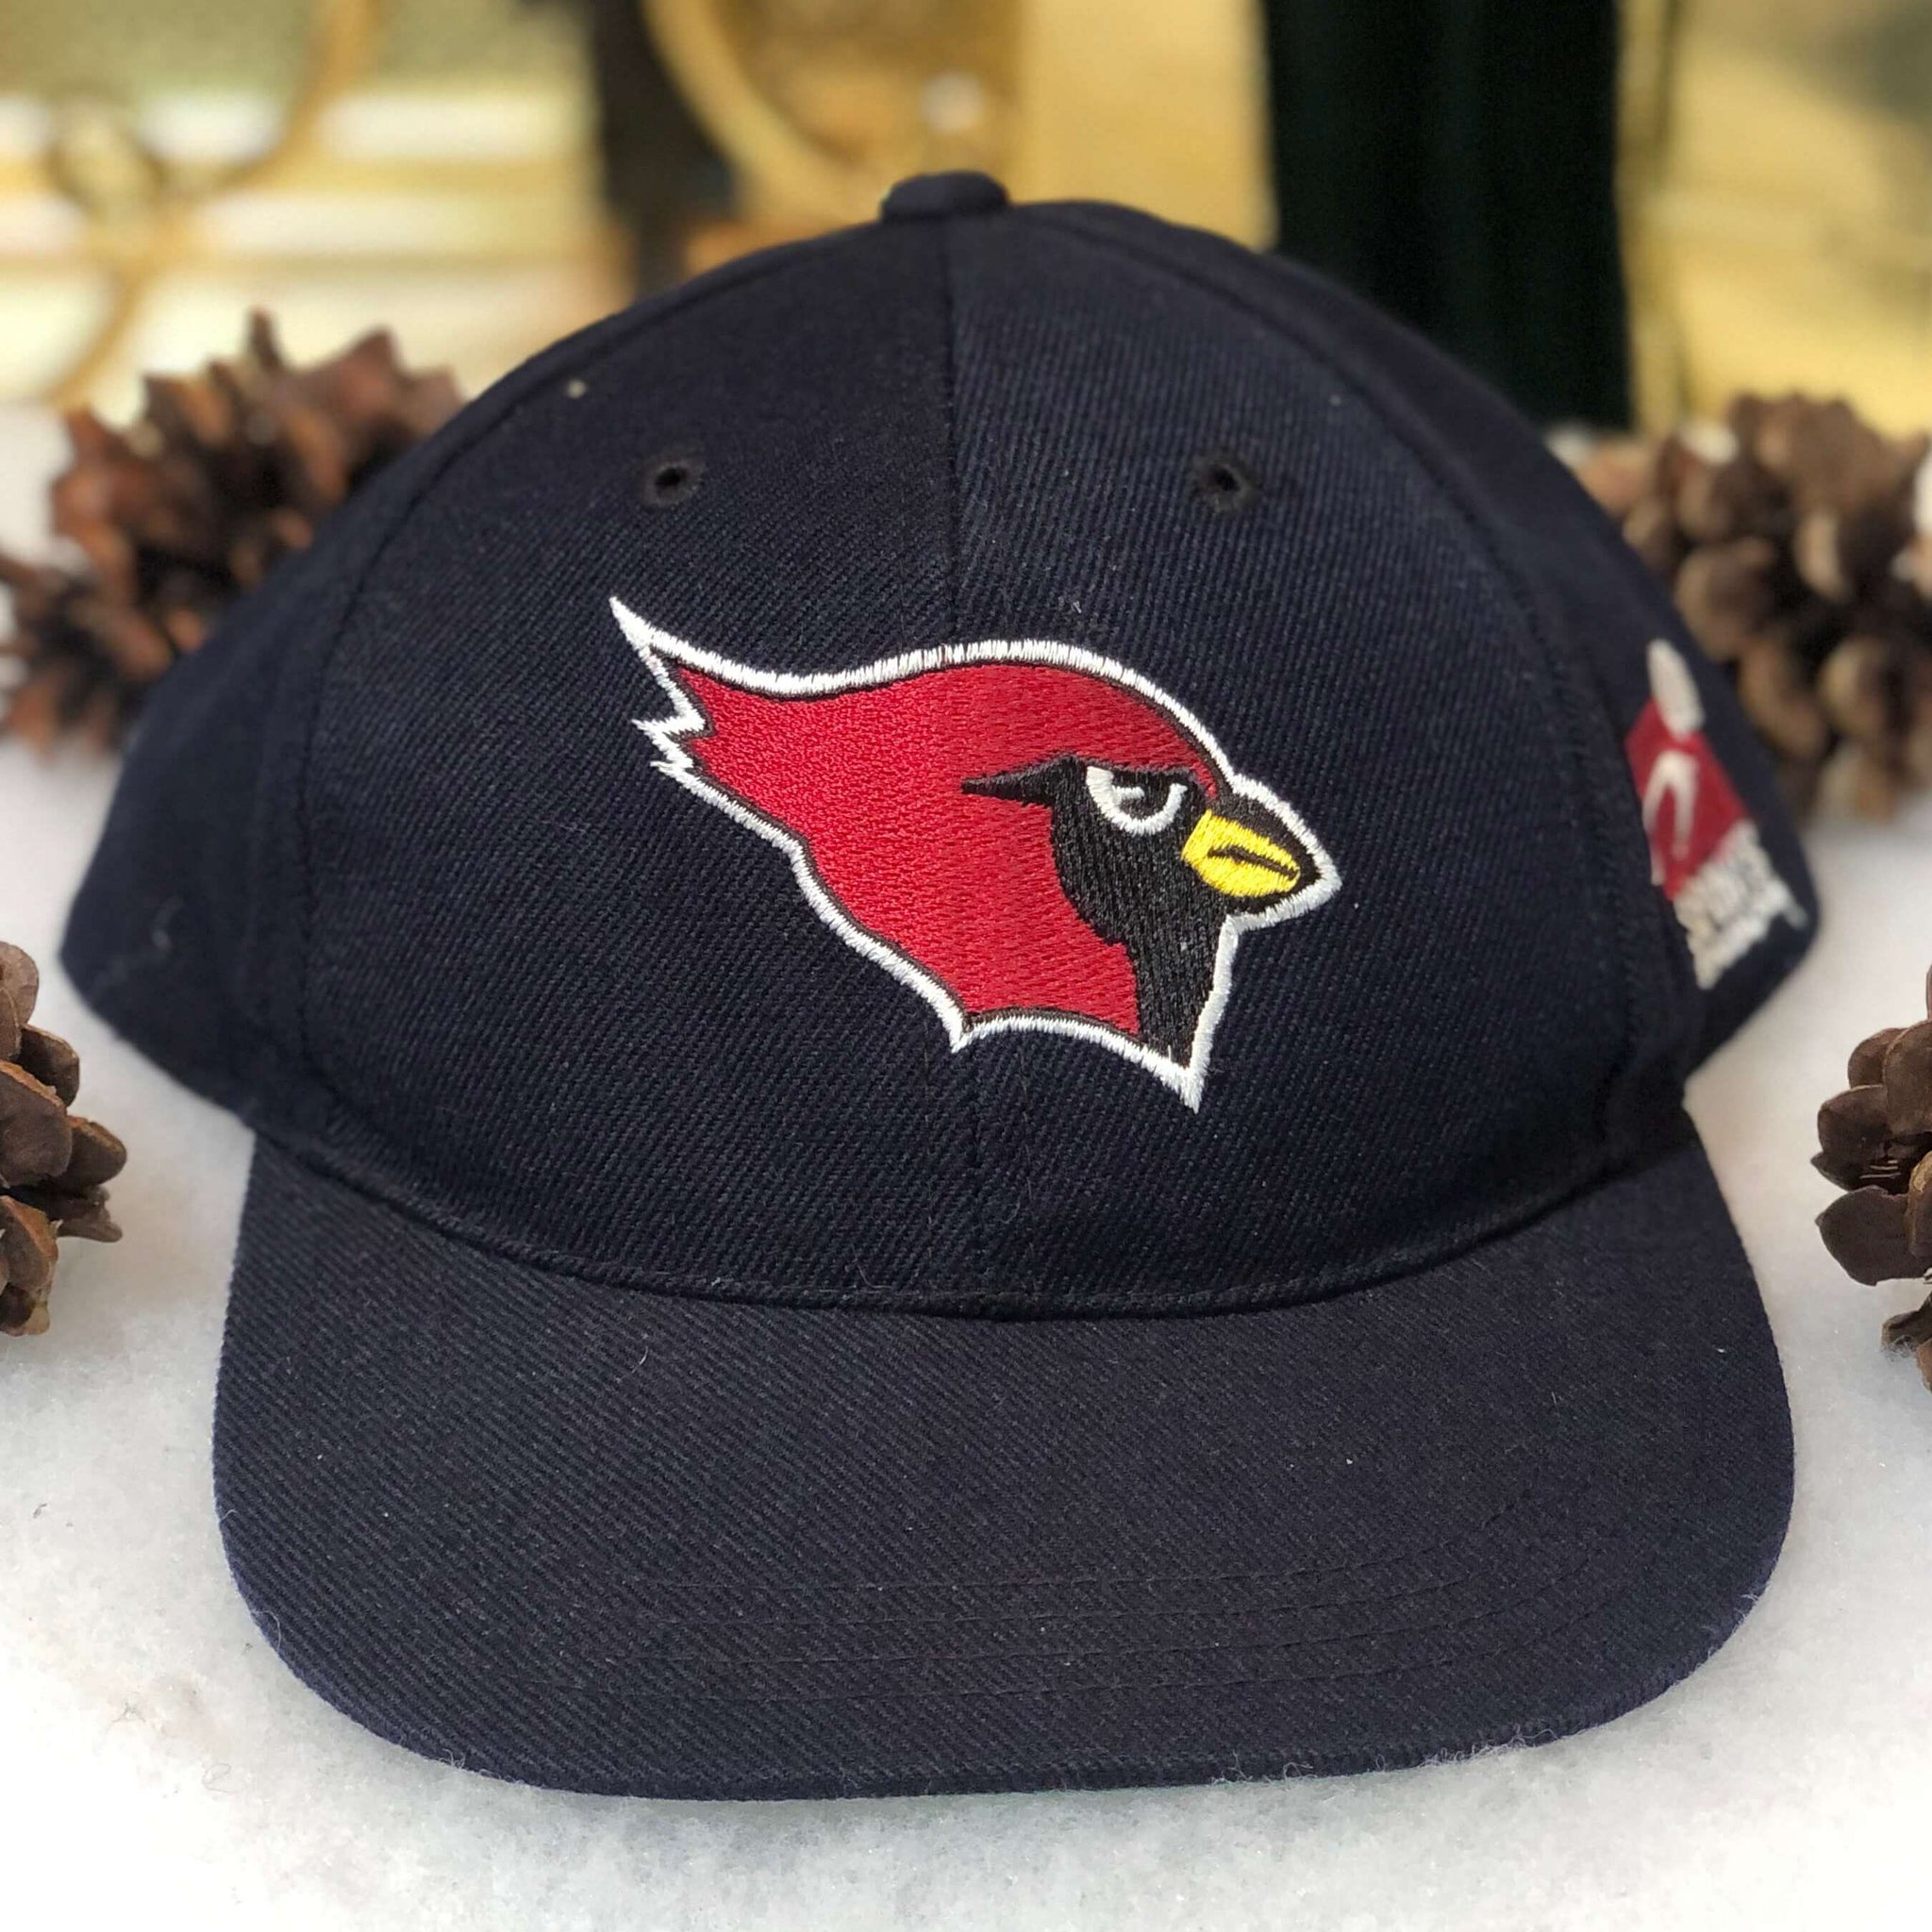 Vintage NFL Arizona Cardinals Sports Specialties Plain Logo Wool *YOUTH* Snapback Hat